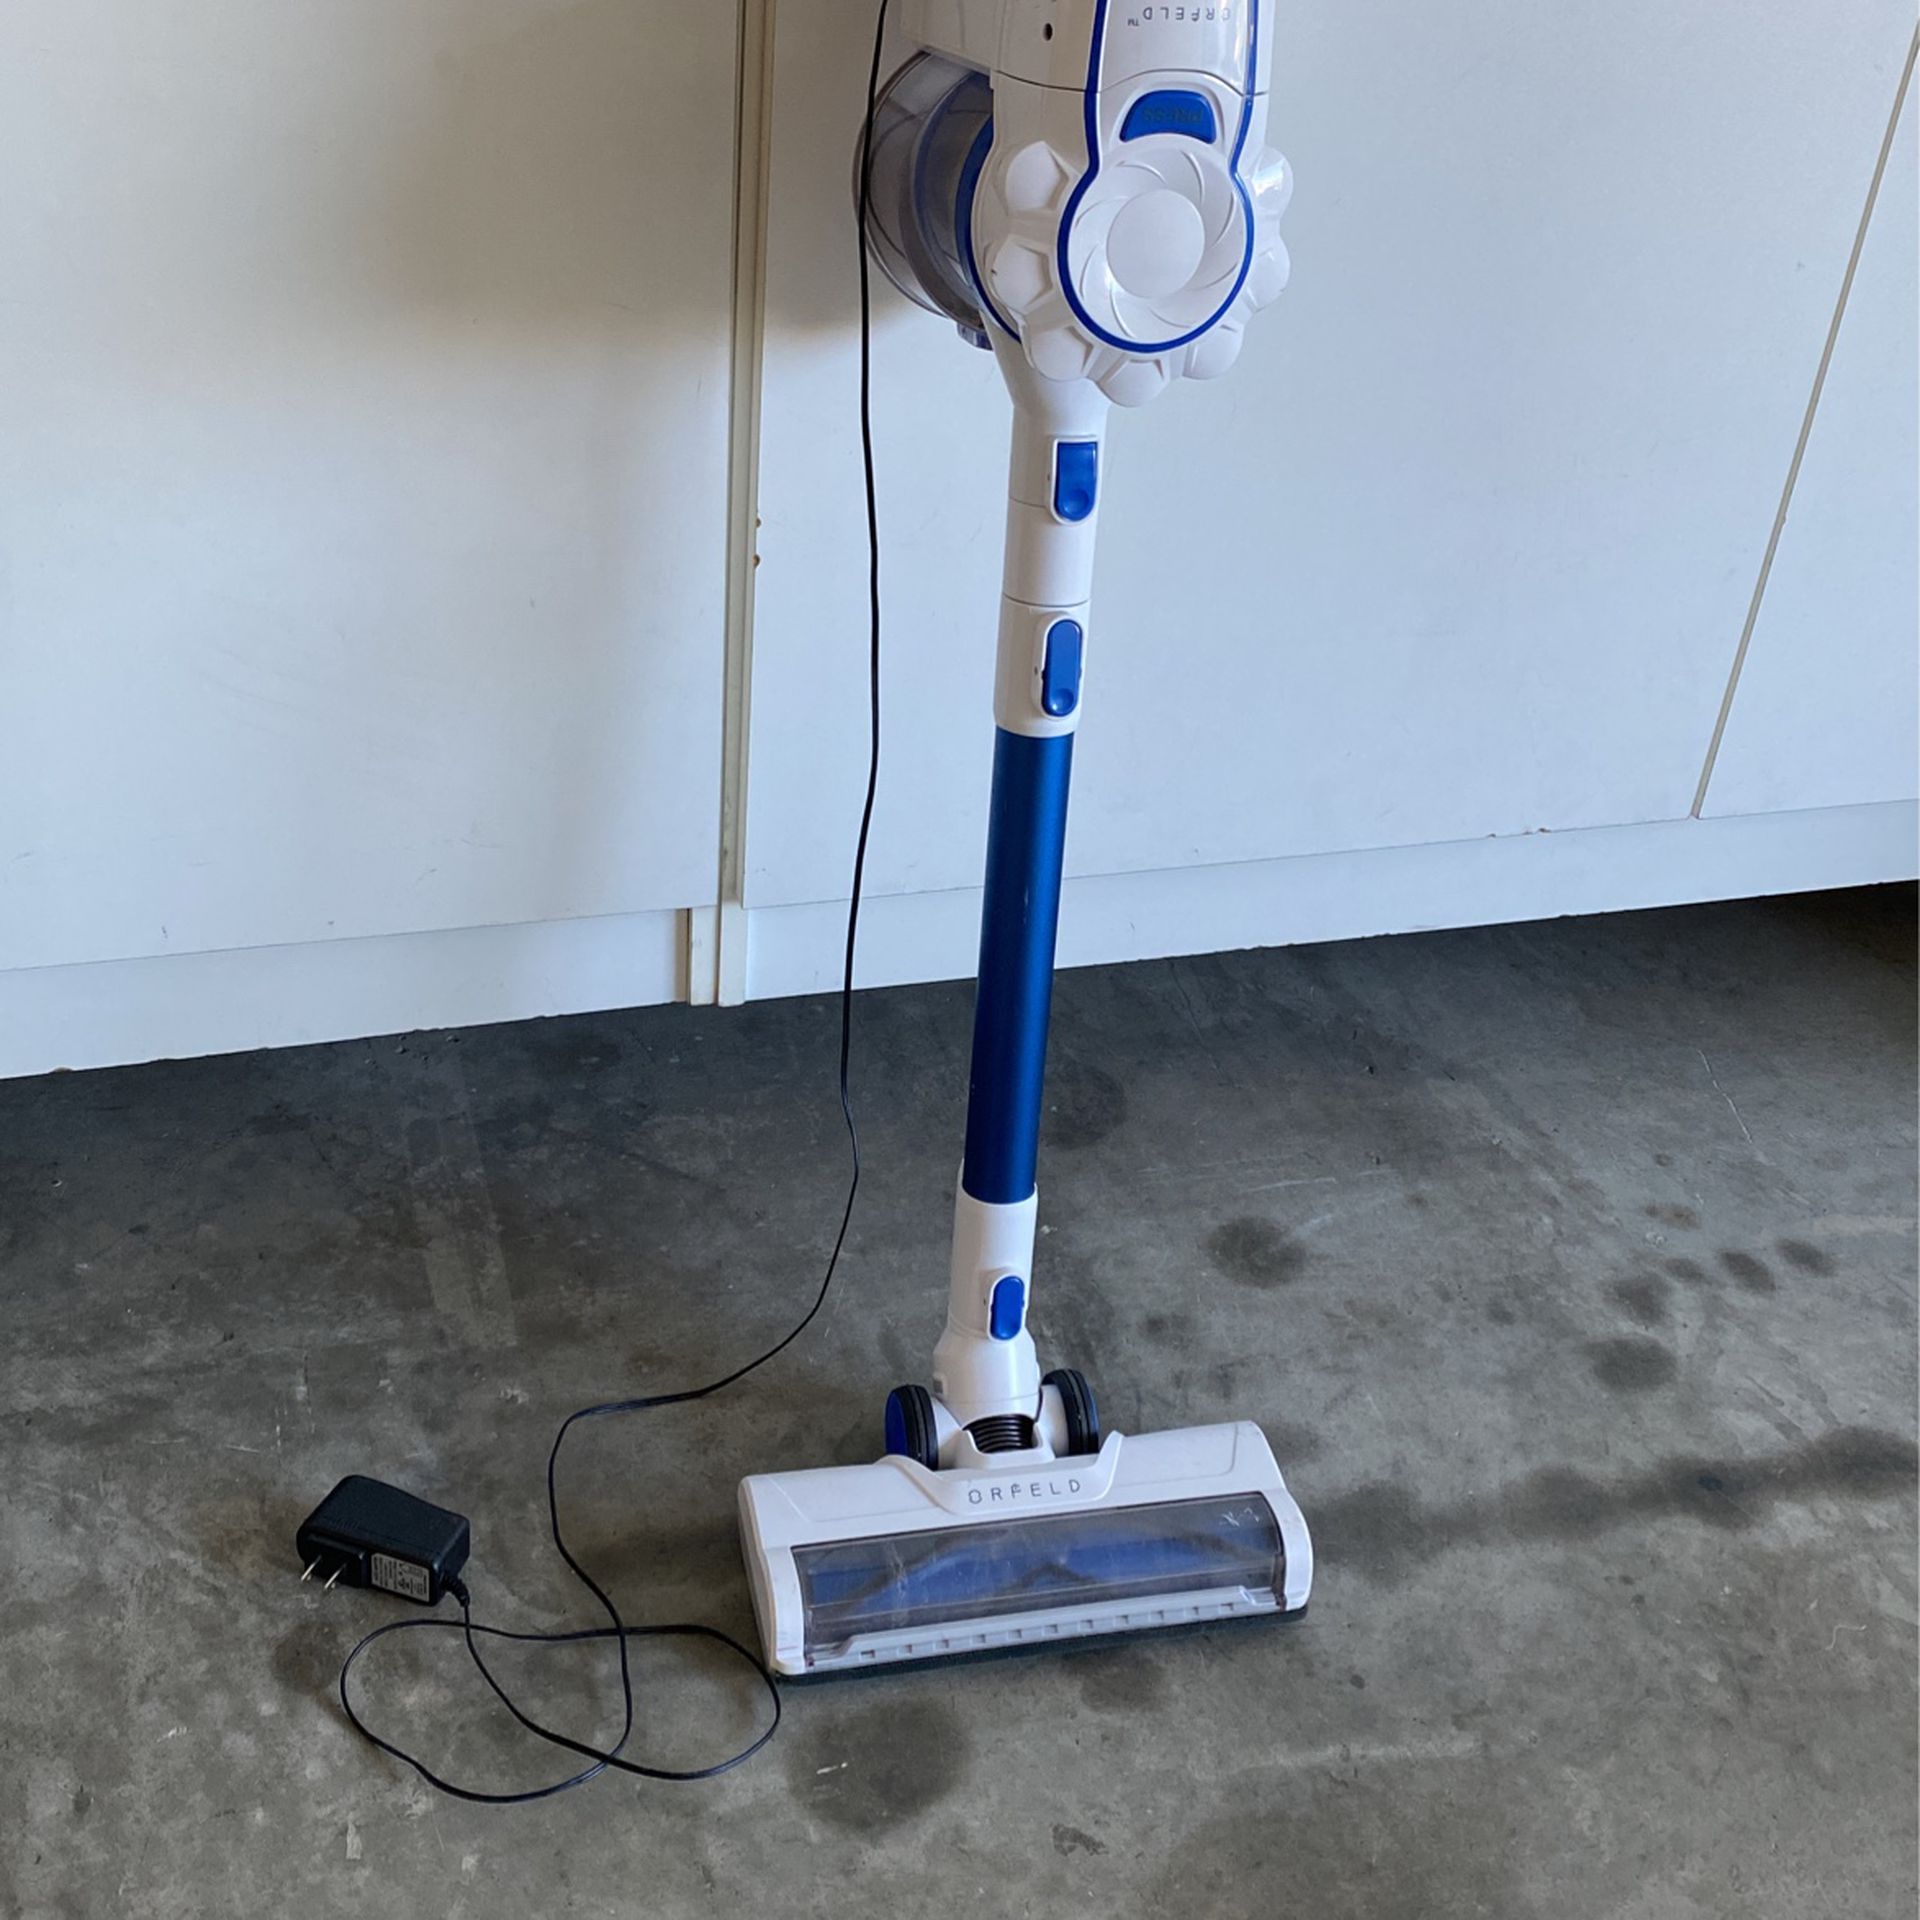 Cordless Vacuum for Sale in Rancho Santa Margarita, CA - OfferUp